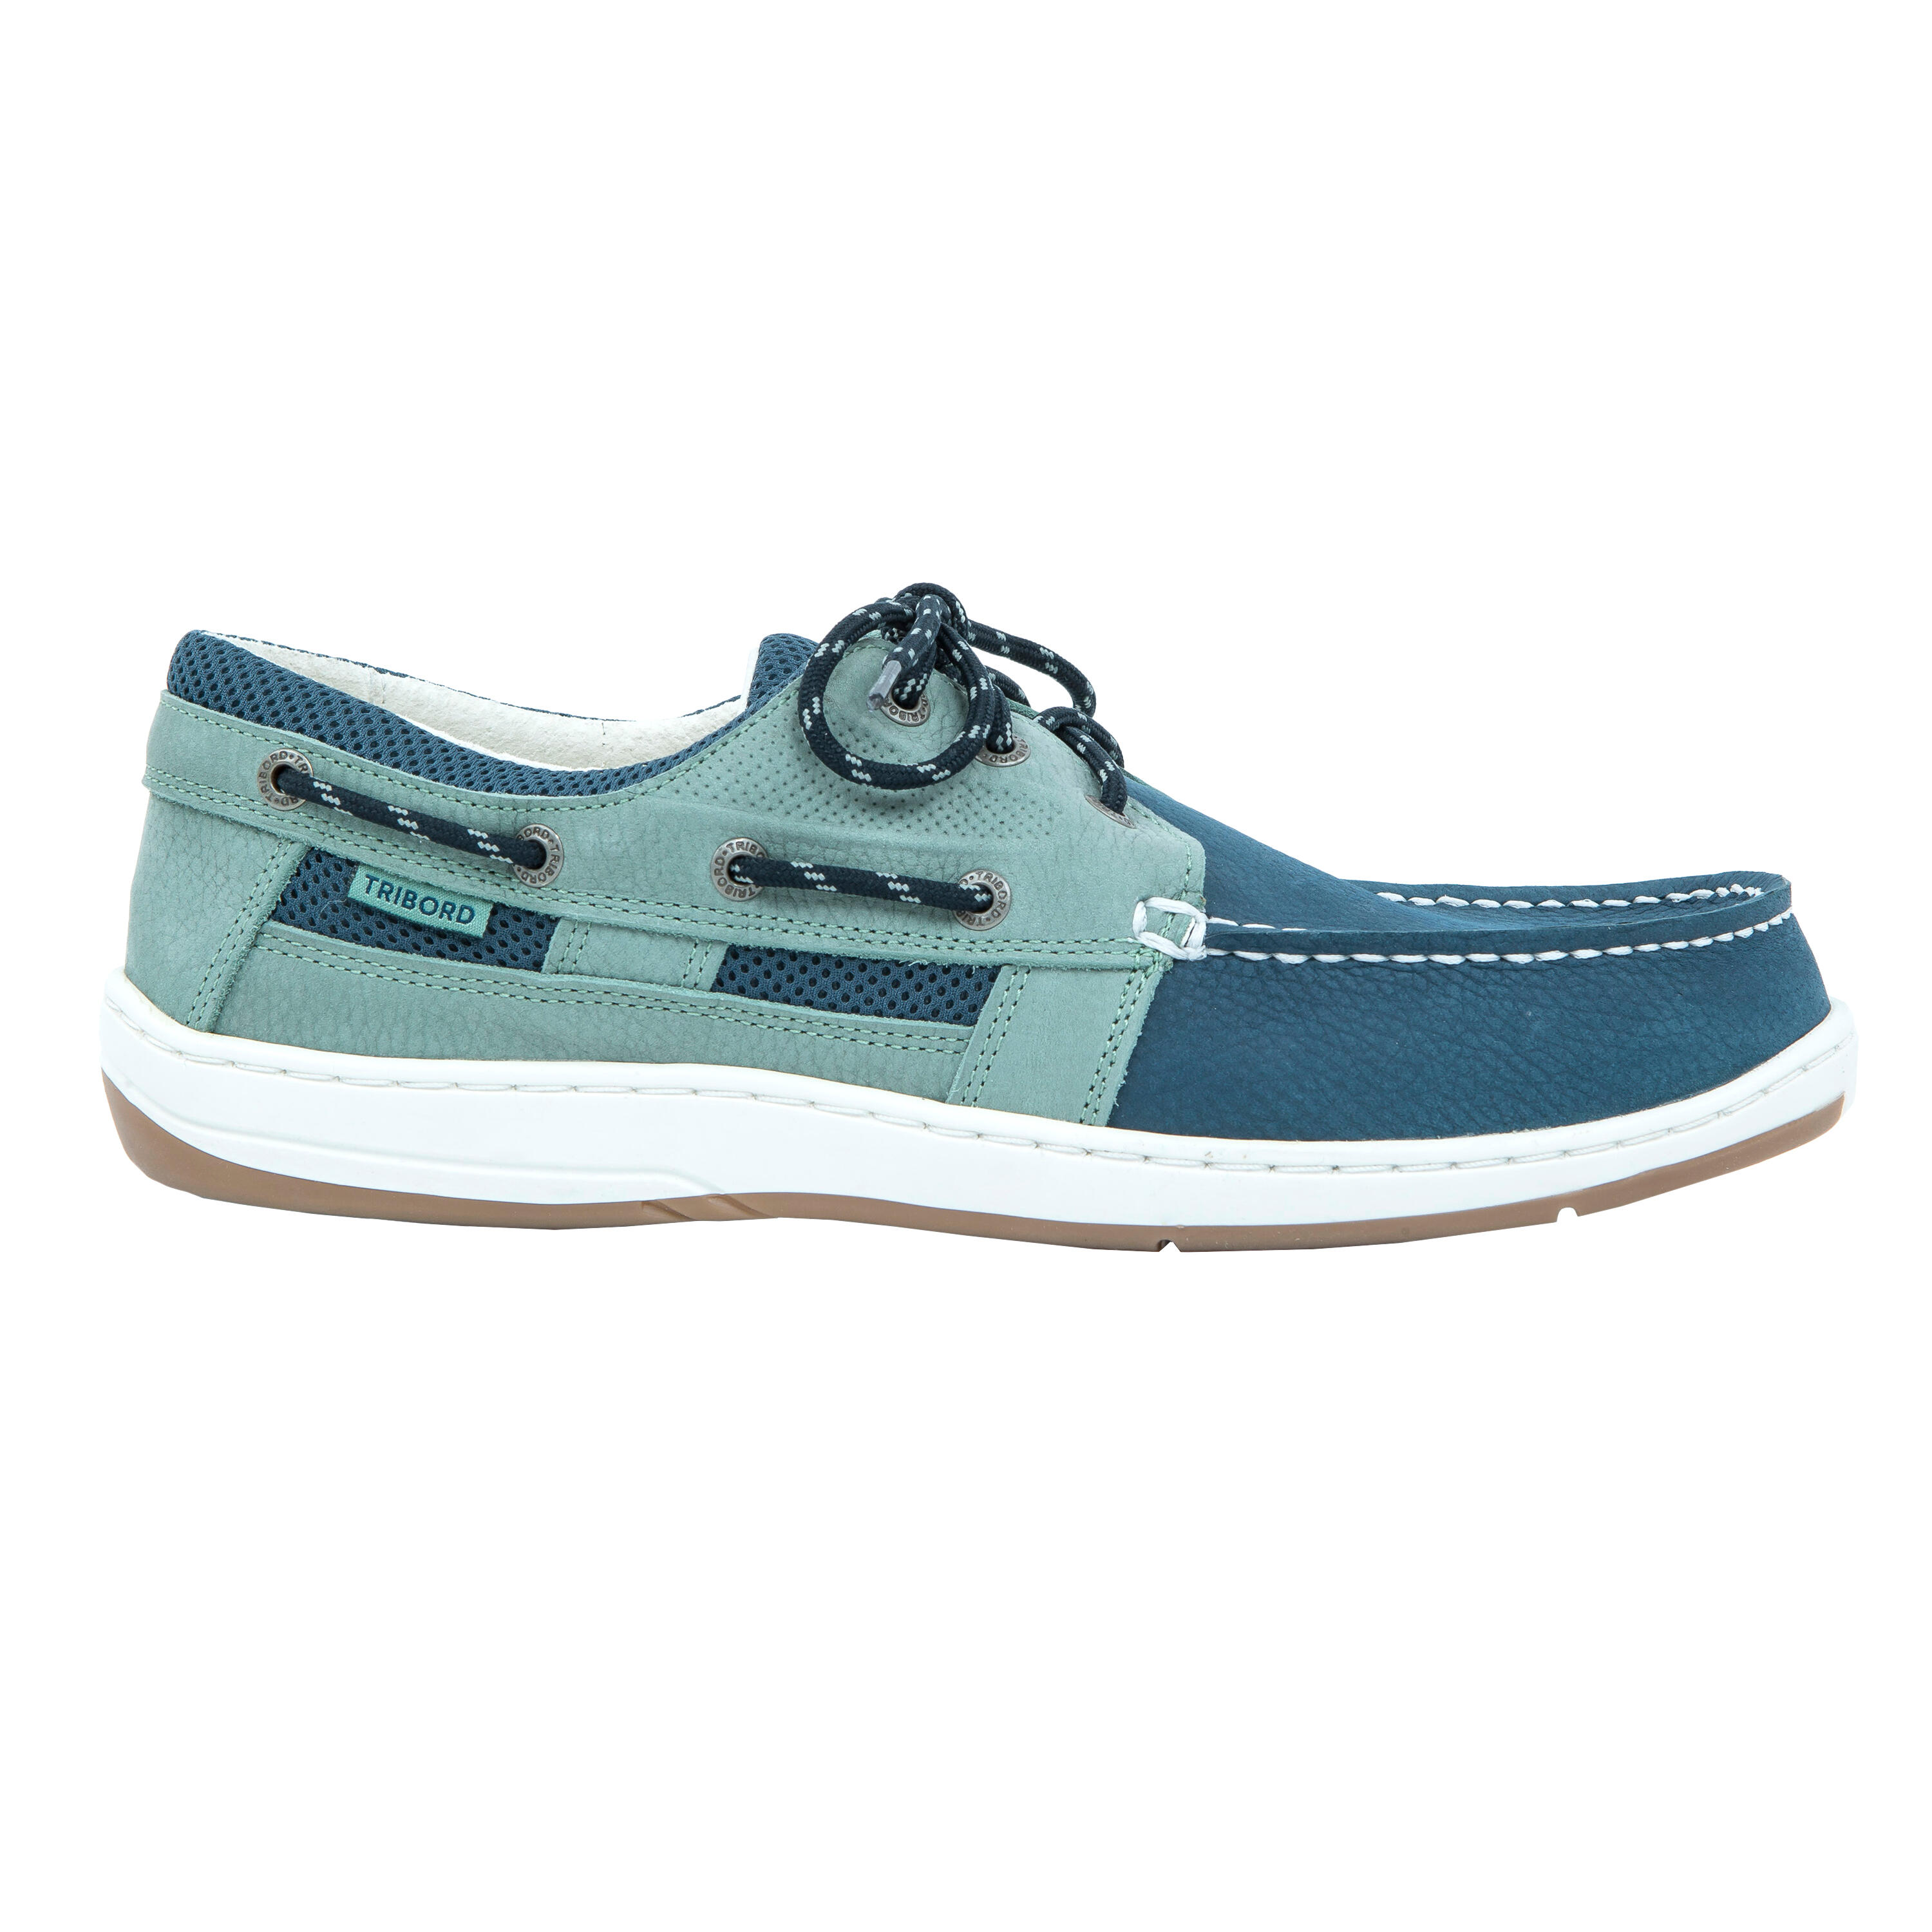 Men’s Leather Boat Shoes CLIPPER - Petrol Blue / Khaki 1/9